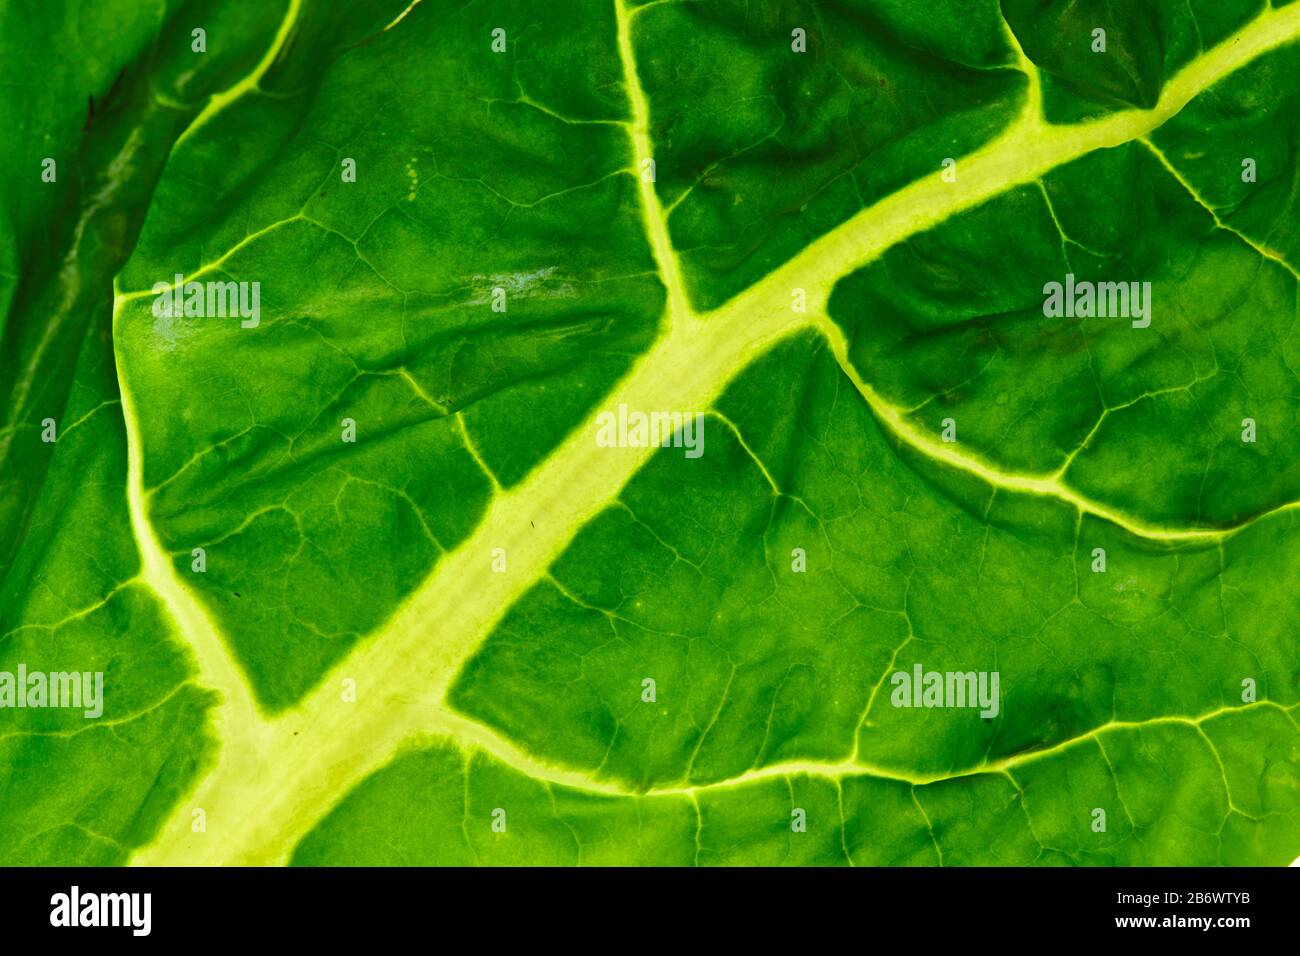 Swiss Chard, Chard (Beta vulgaris vulgaris). Close-up of green leaf showing veining, Germany Stock Photo